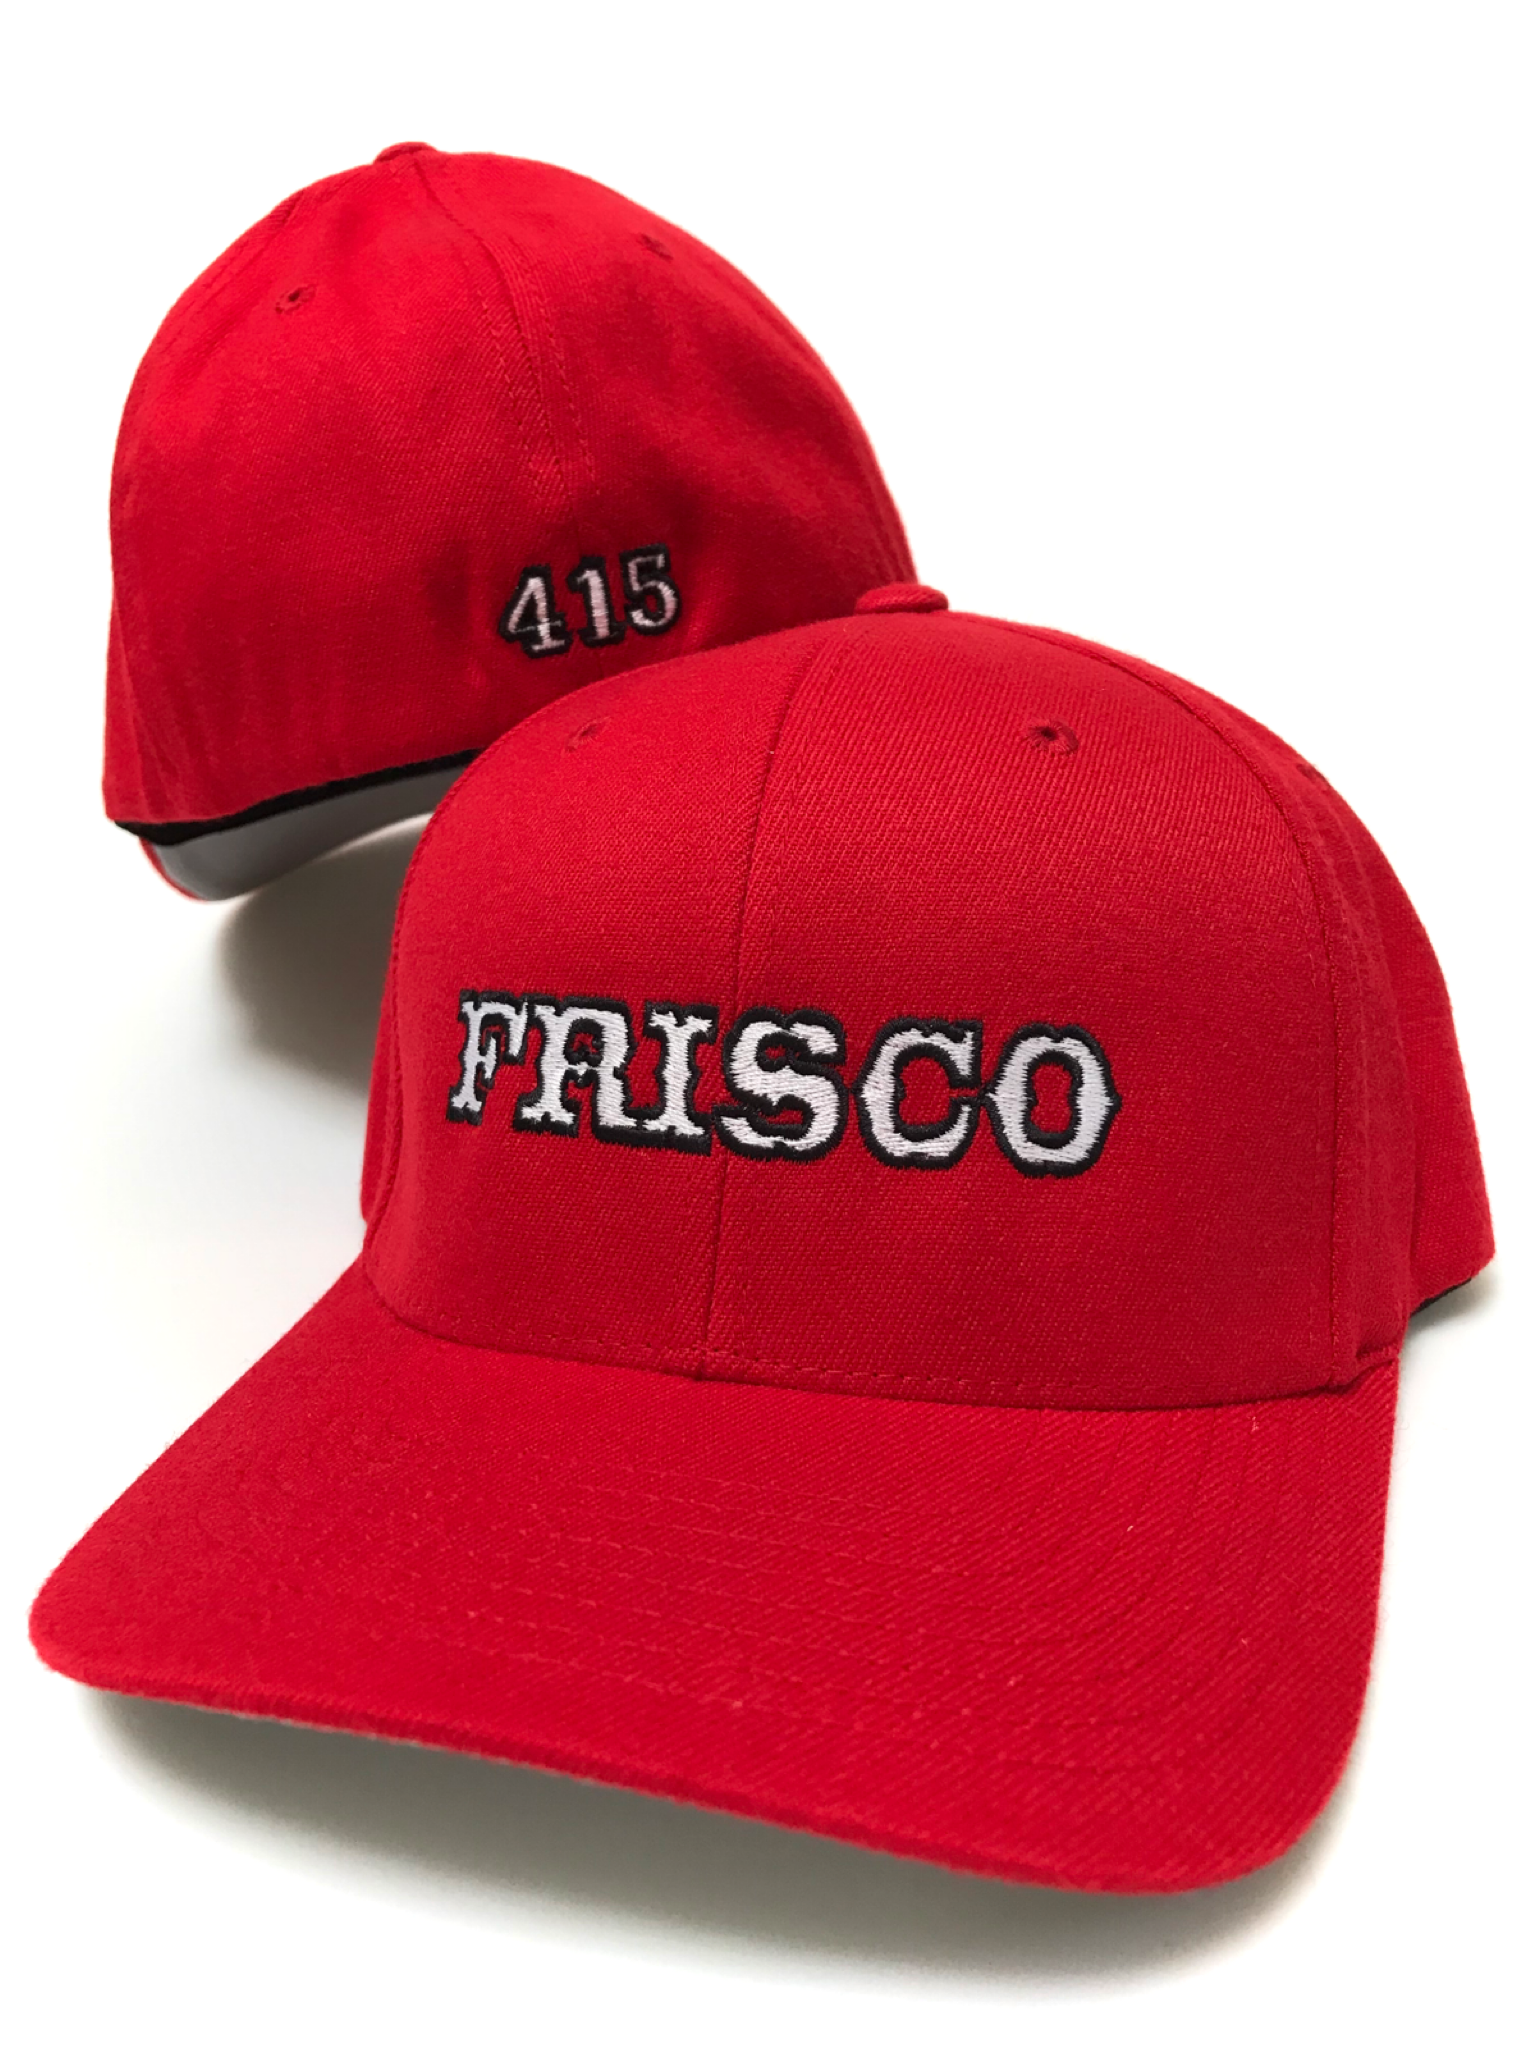 Frisco Flex - Clothing, 415 Fit